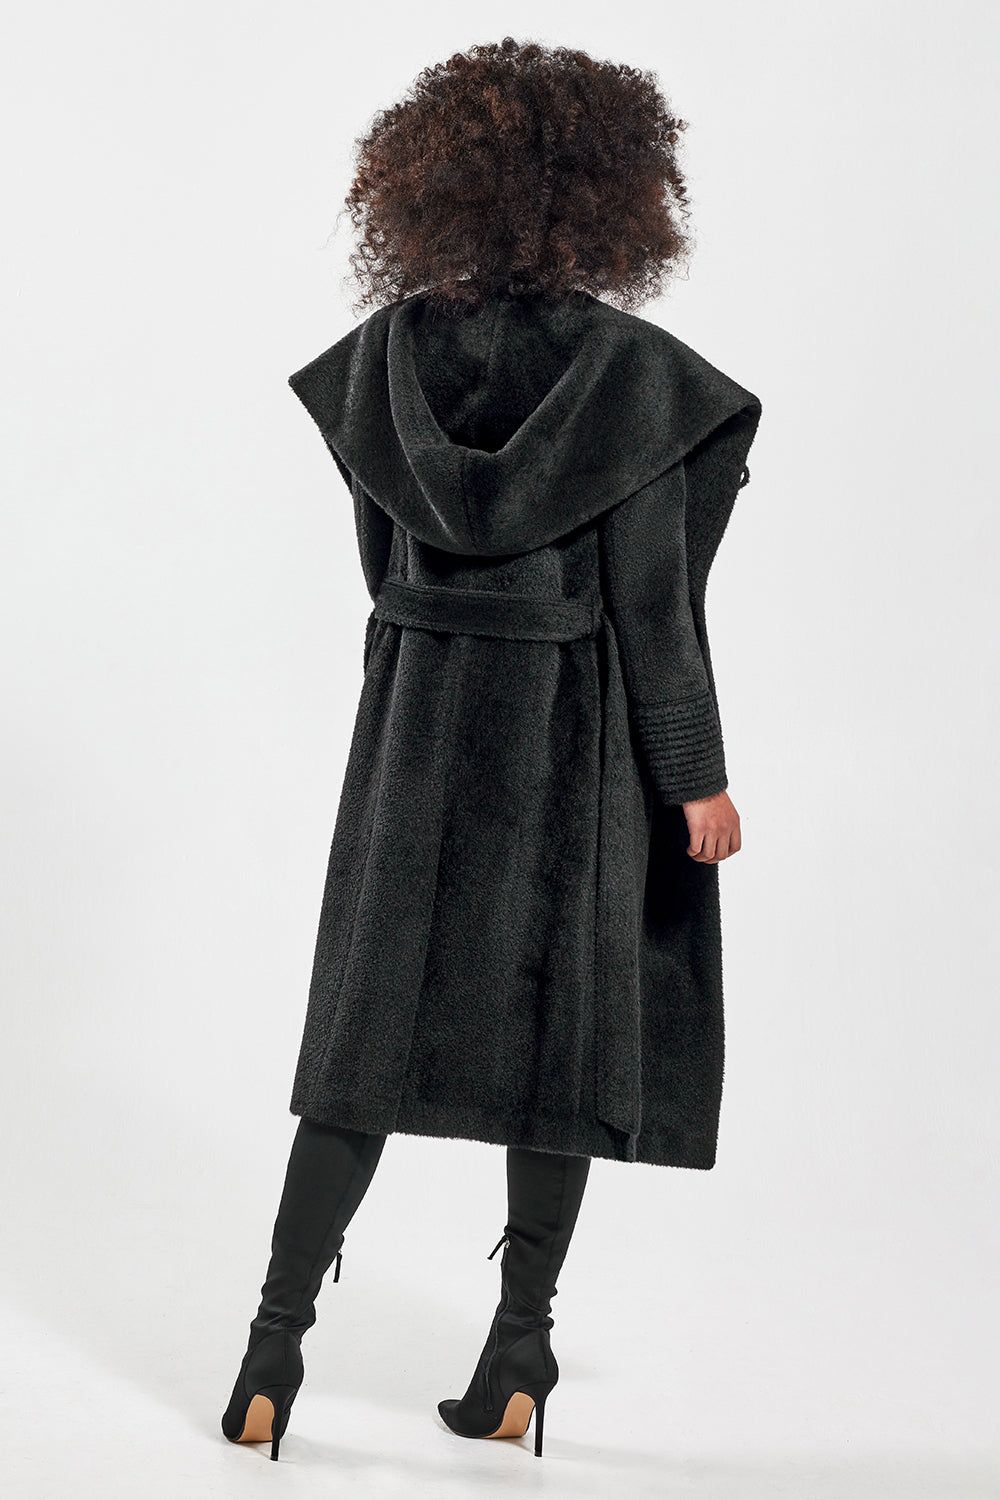 Louis Vuitton Hooded Wrap Coat Black White. Size 36